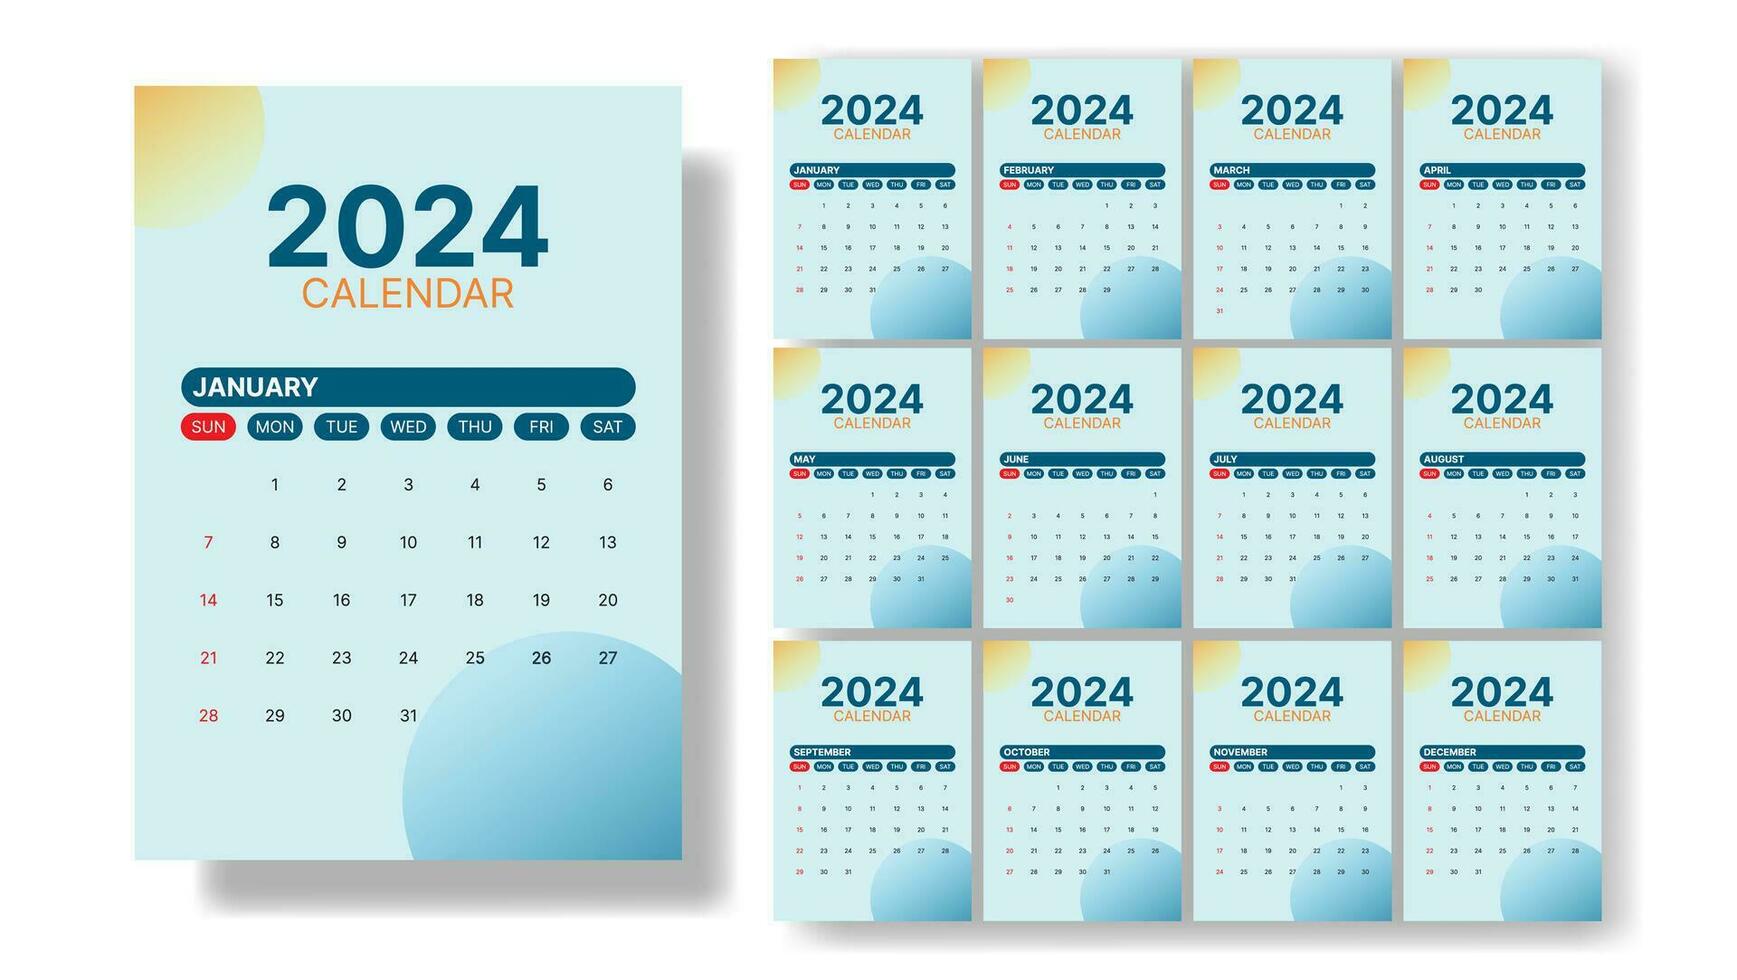 2024 Kalender korporativ Vektor Design im Blau Farbe